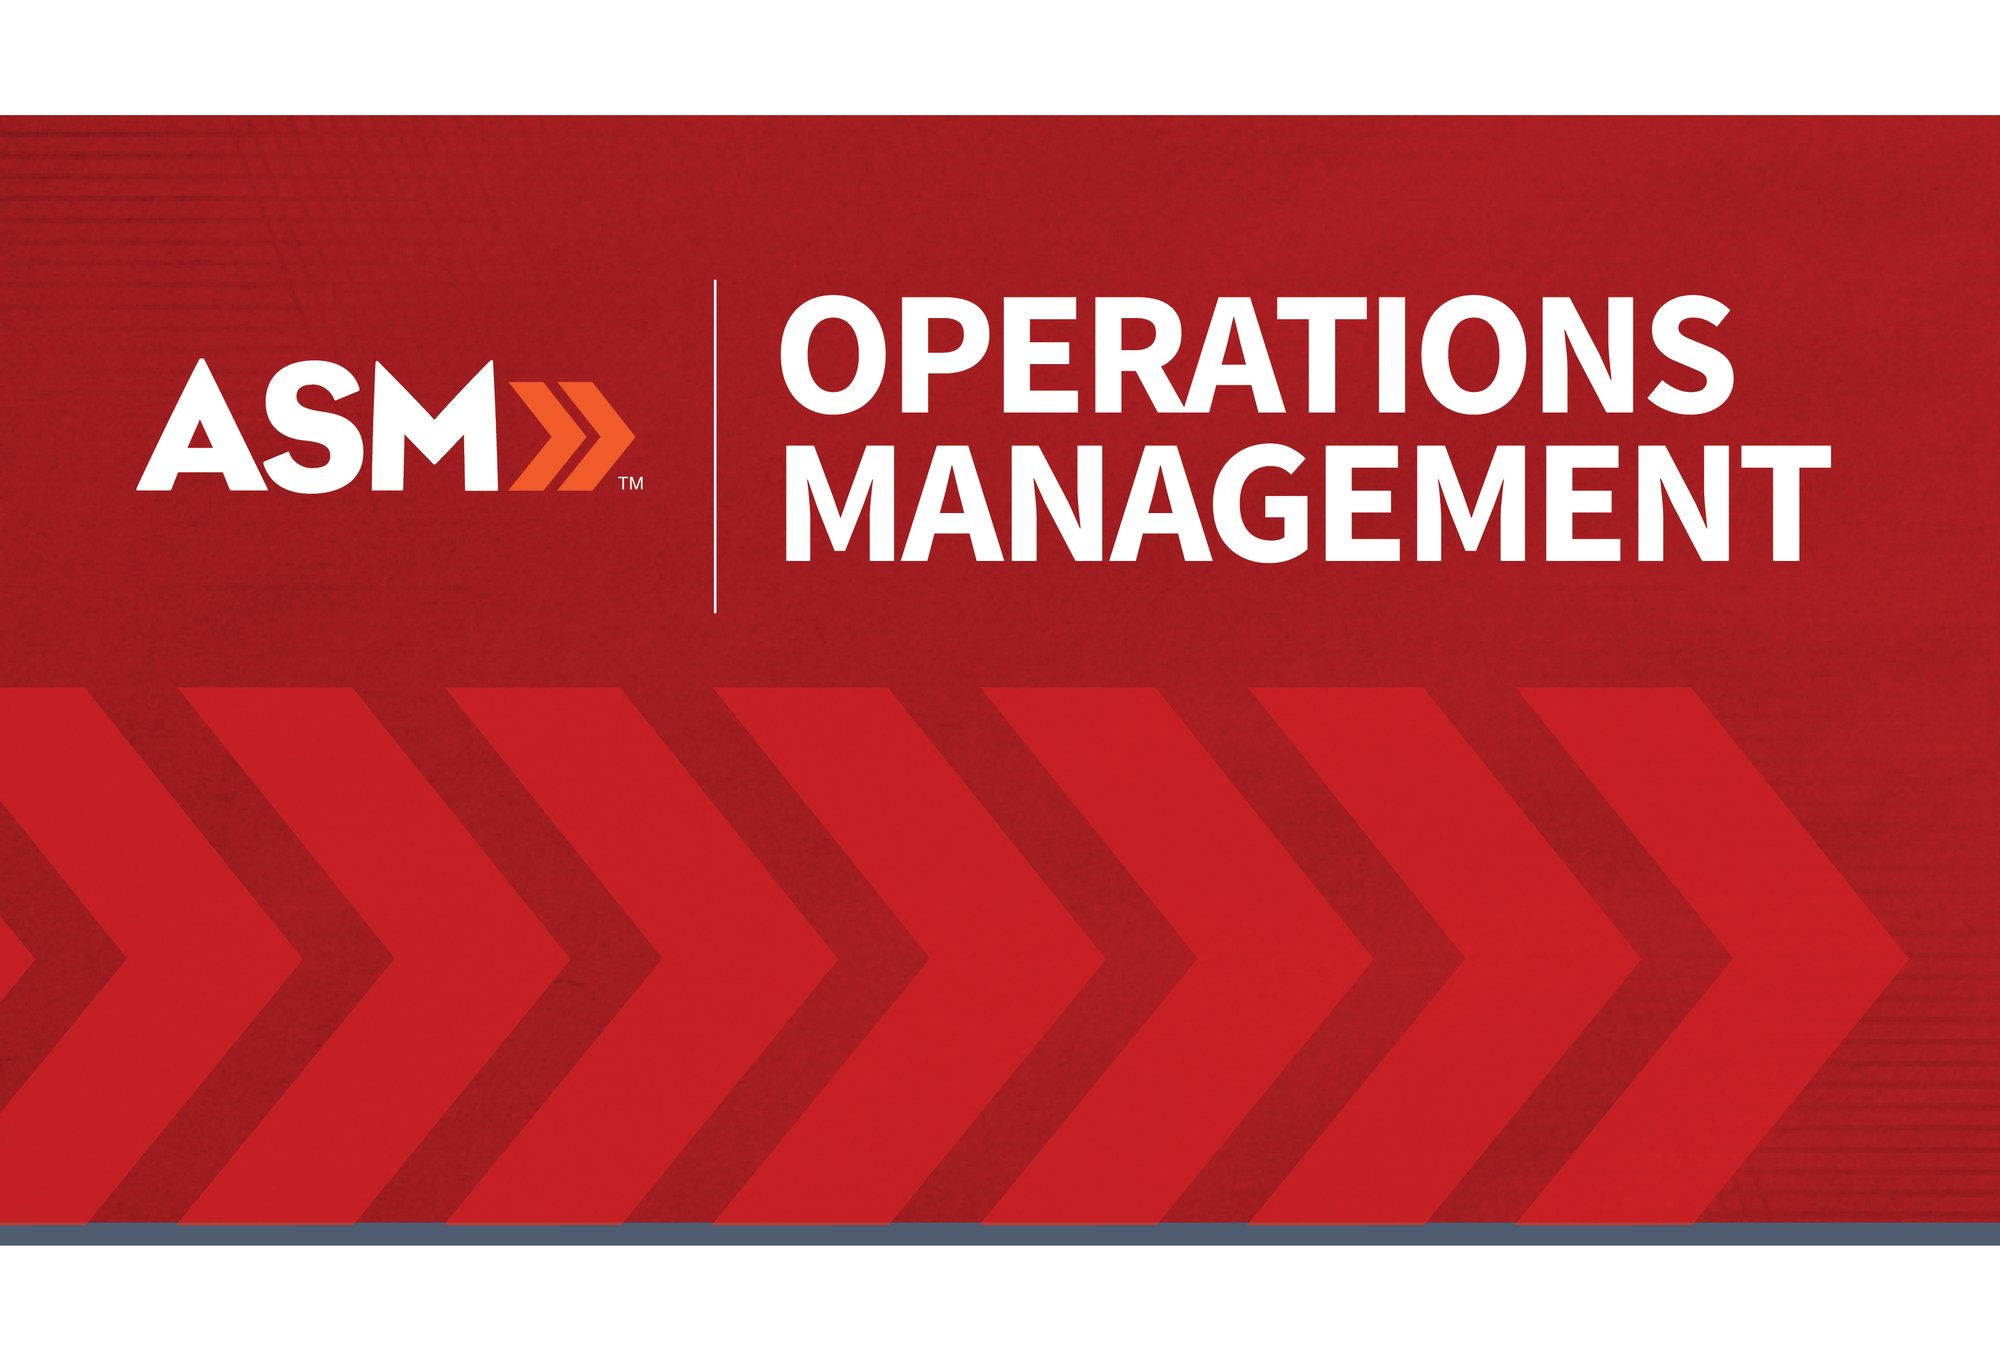 ASM OPERATIONS MANAGEMENT